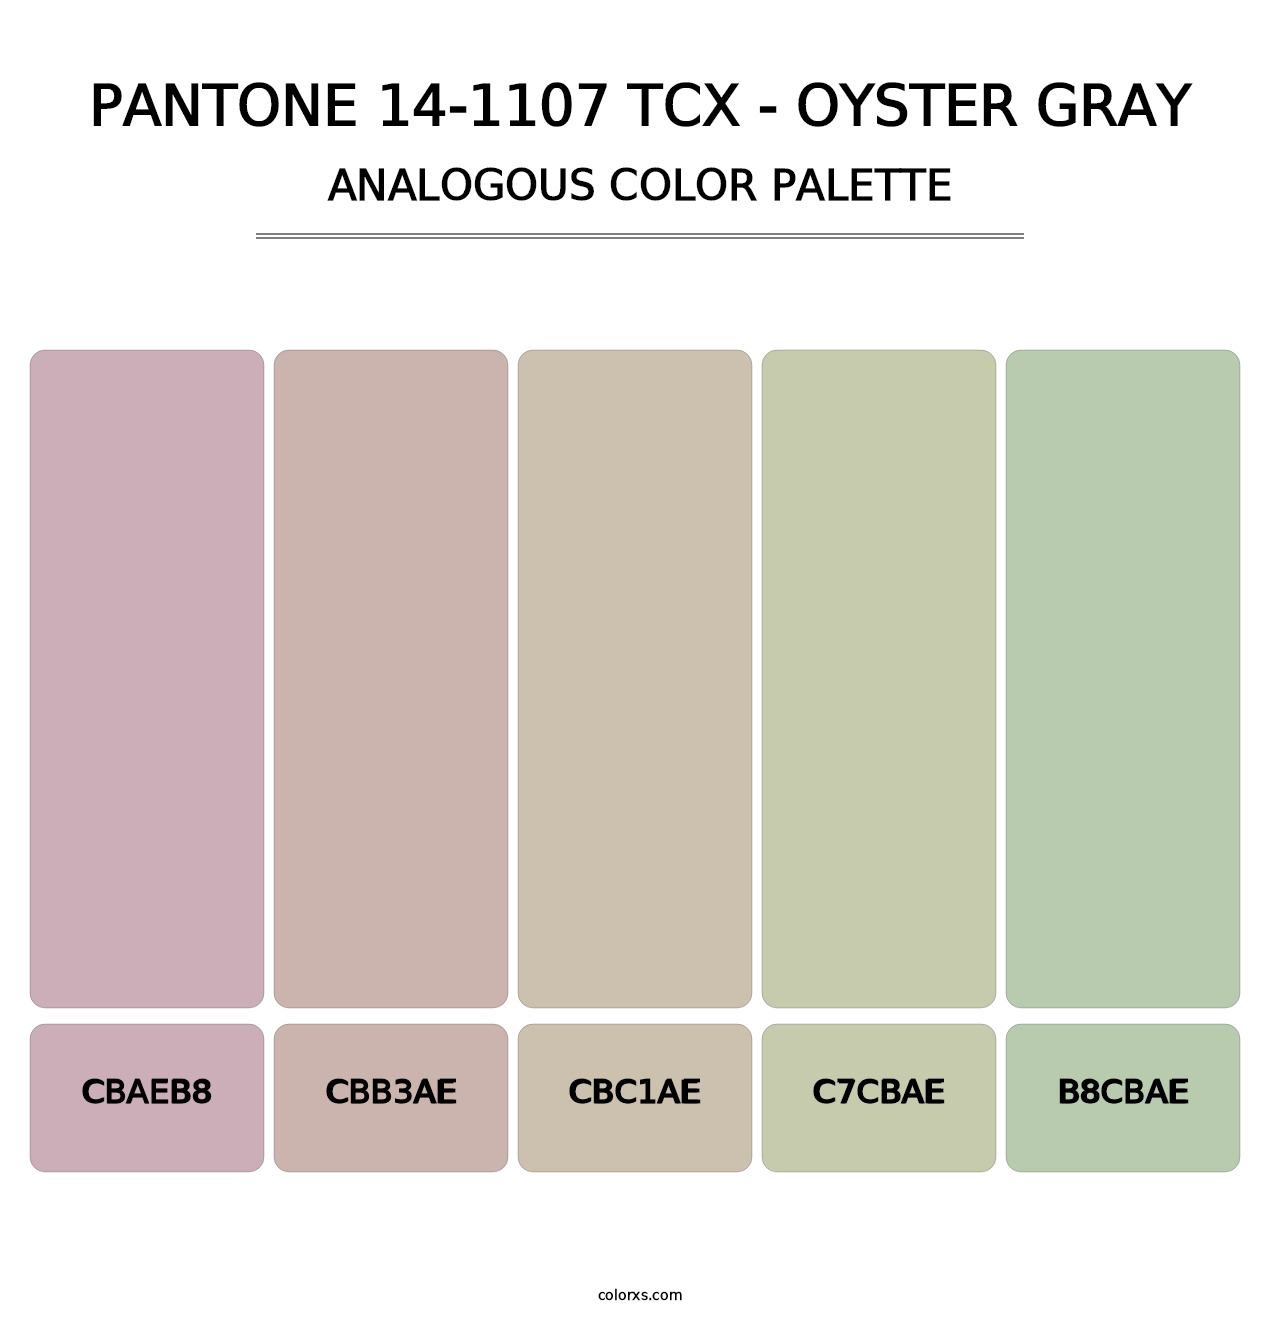 PANTONE 14-1107 TCX - Oyster Gray - Analogous Color Palette